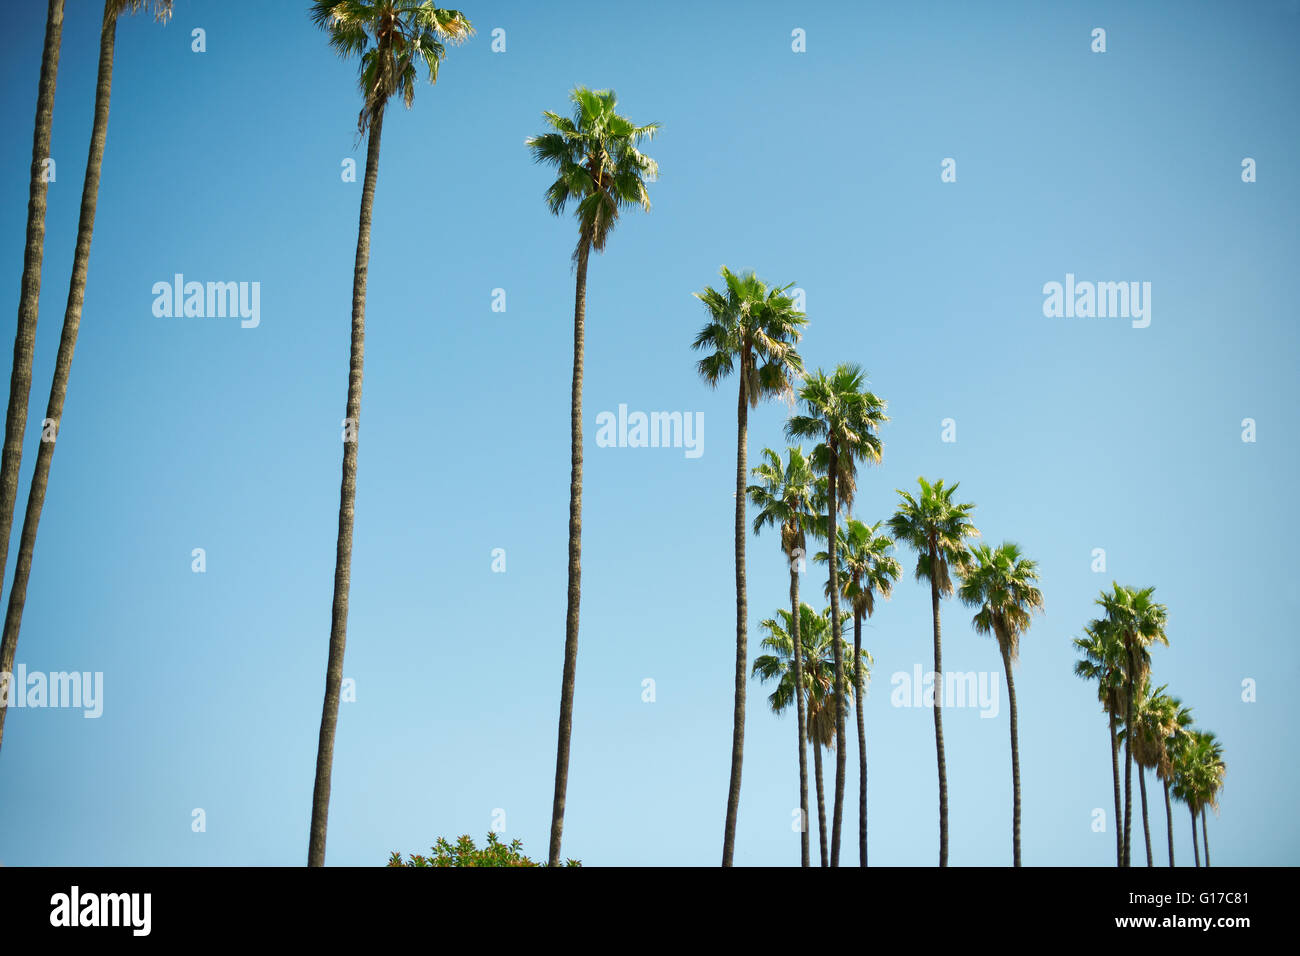 Row of tall palm trees, Los Angeles, USA Stock Photo